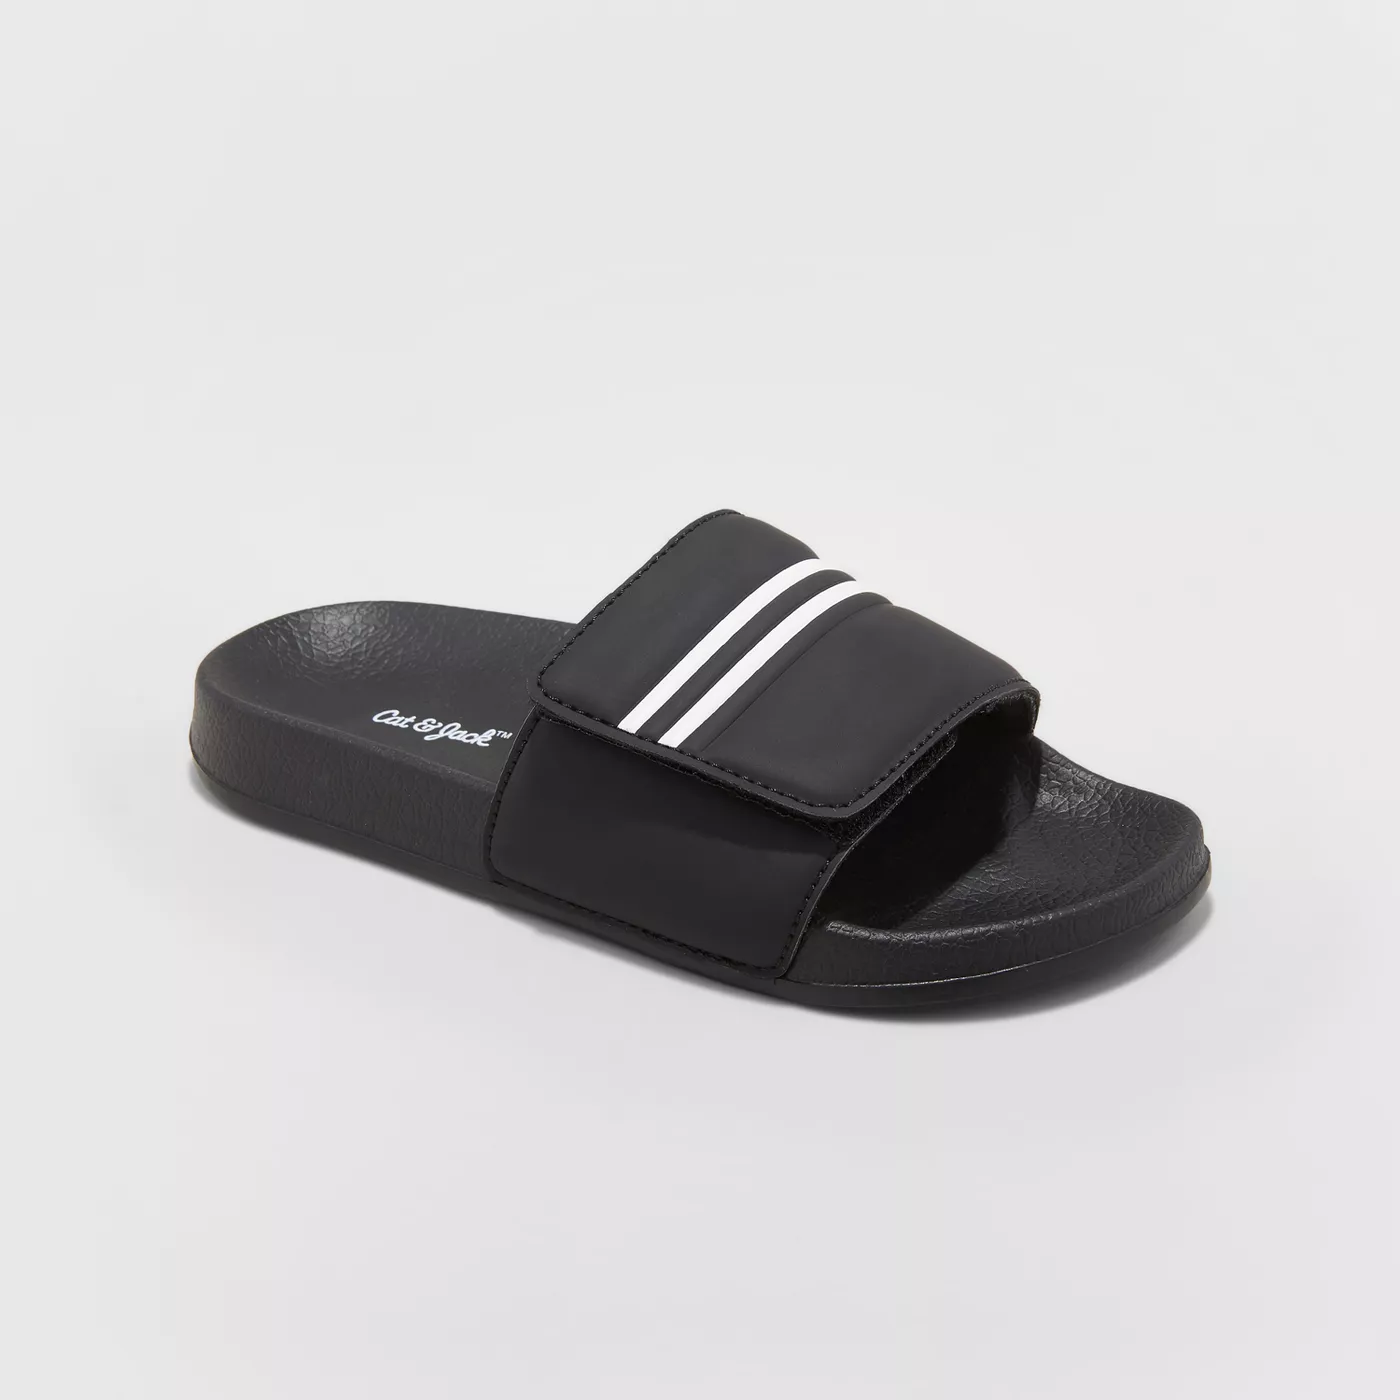 Boys' Wilton Slide Sandals - Cat & Jackâ¢ Black - image 1 of 3